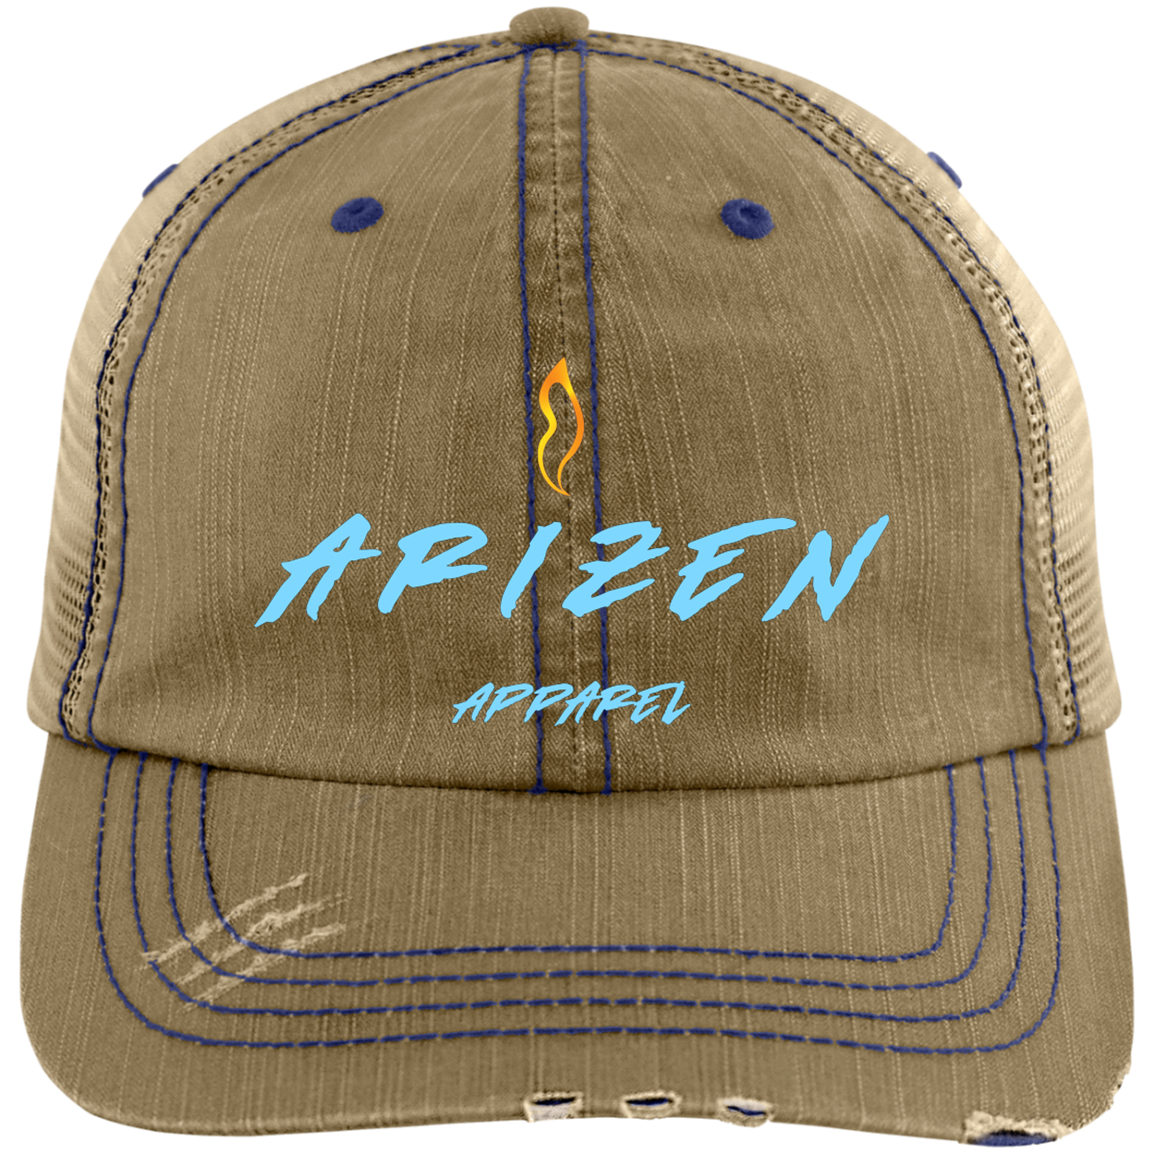 Arizen Apparel Summer Hat Collection